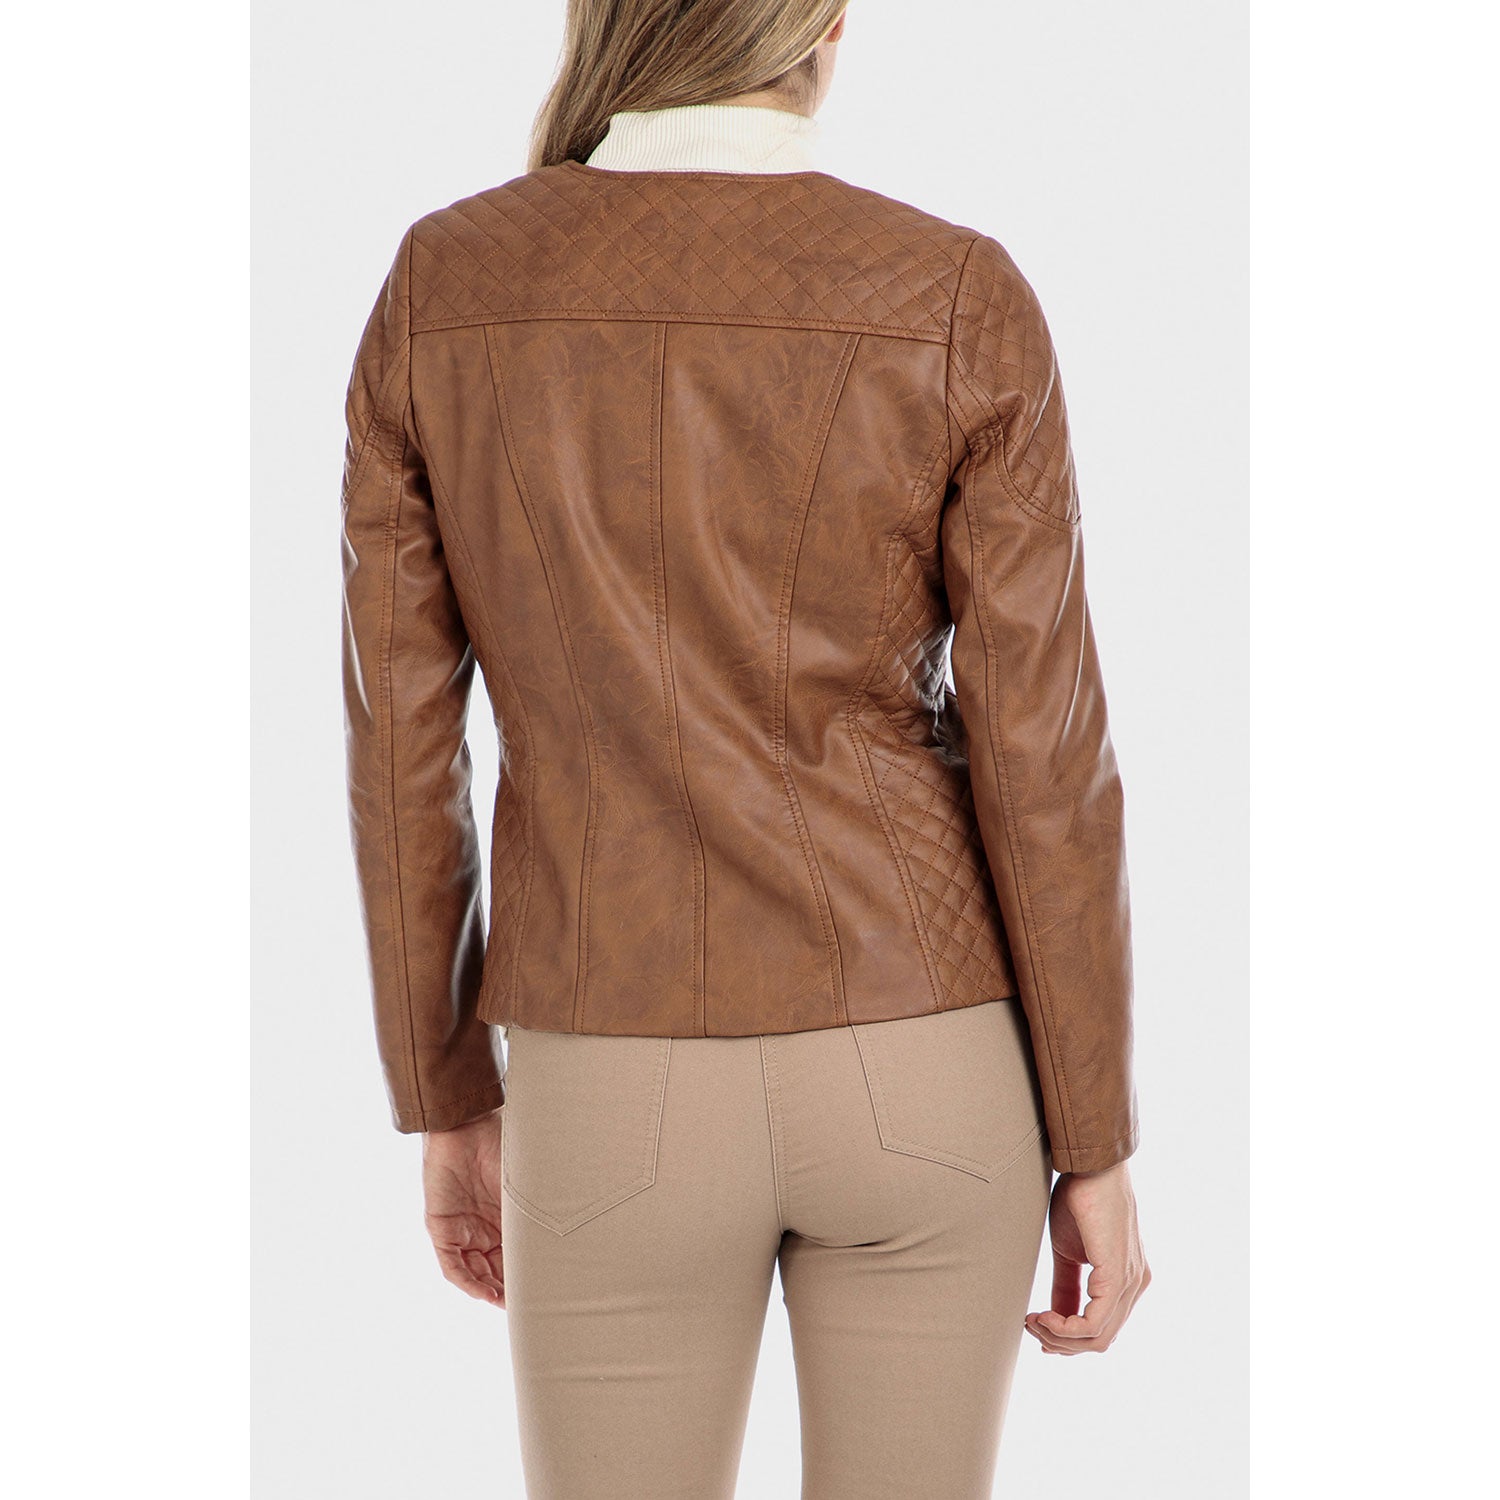 Punt Roma Jacket - Beige Camel 2 Shaws Department Stores